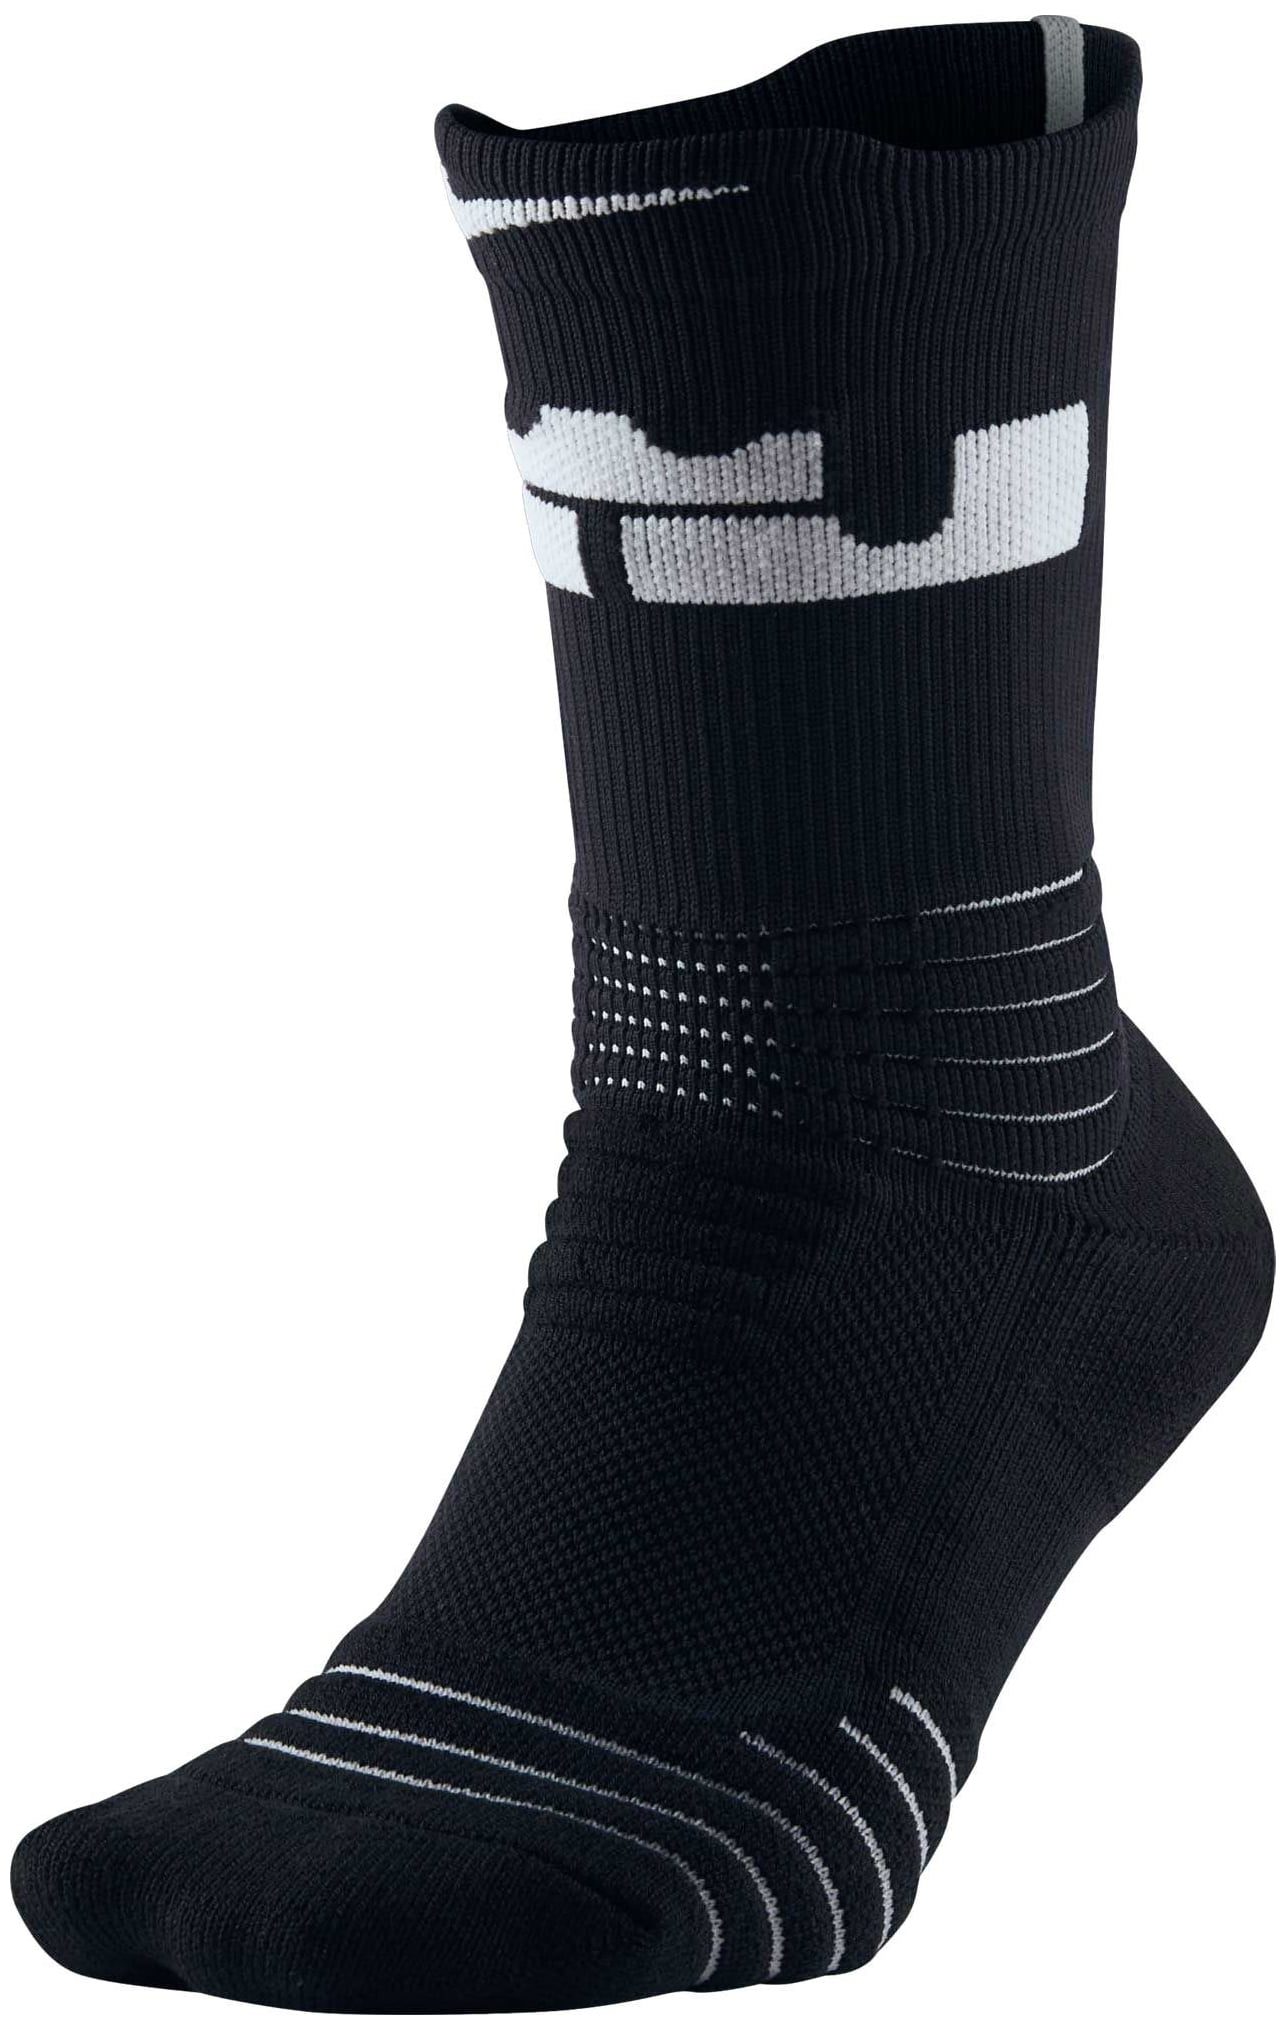 Nike - Nike LeBron Elite Versatility Crew Socks - Black/White - M ...